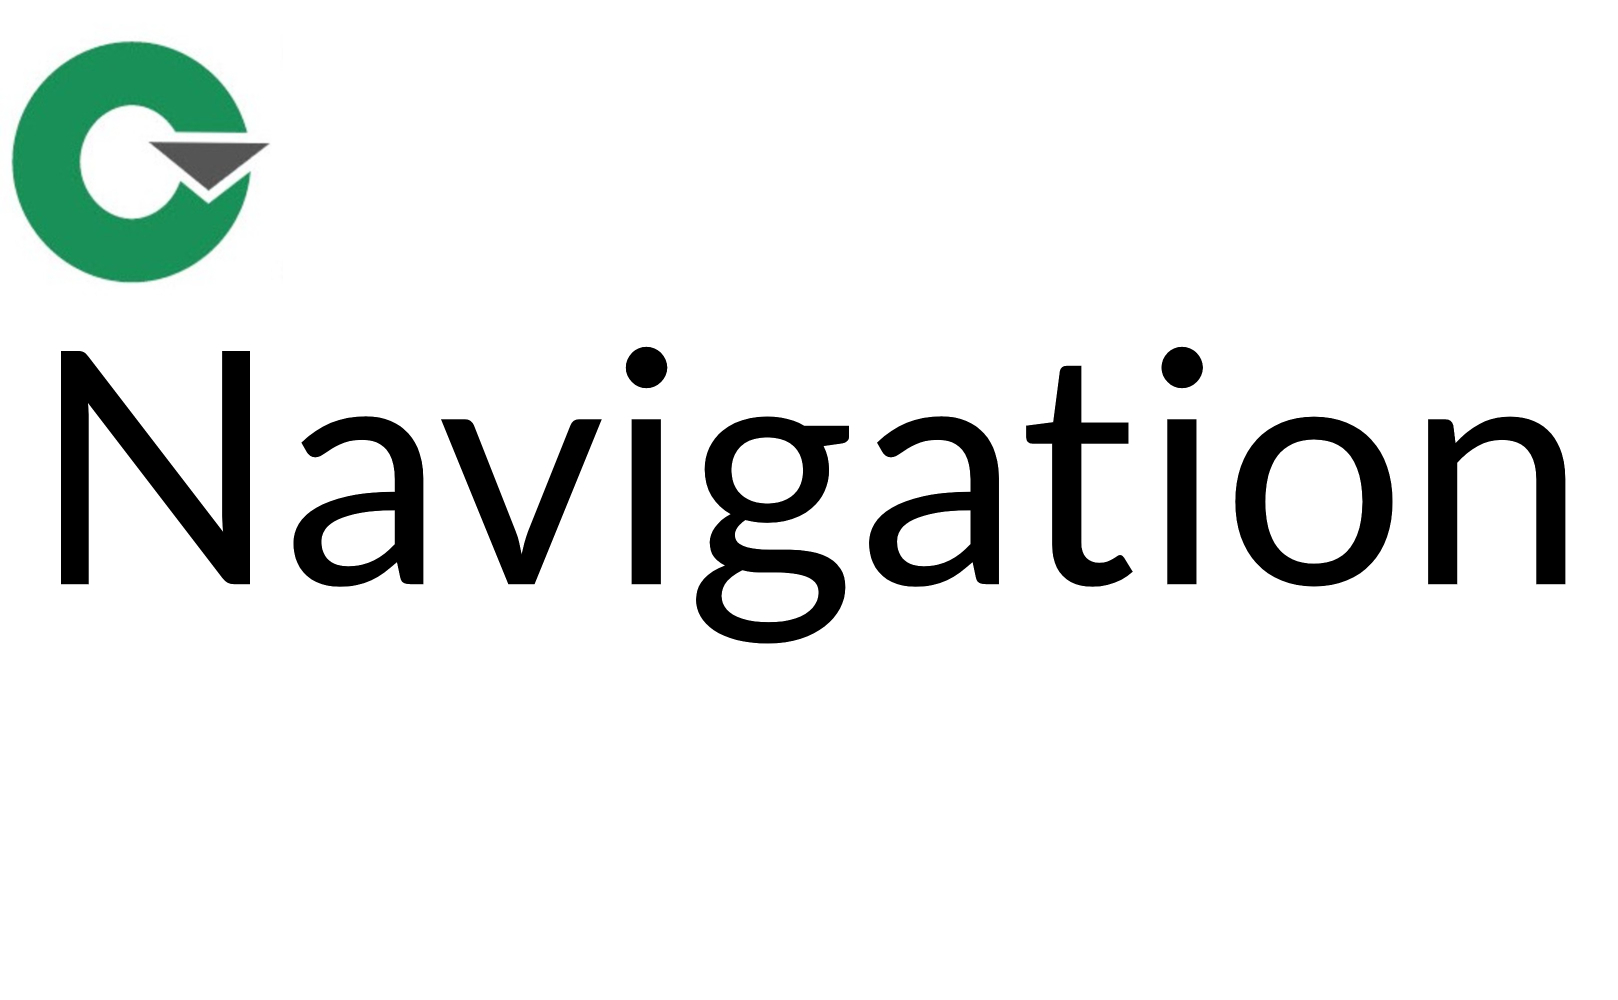 05 - Navigation